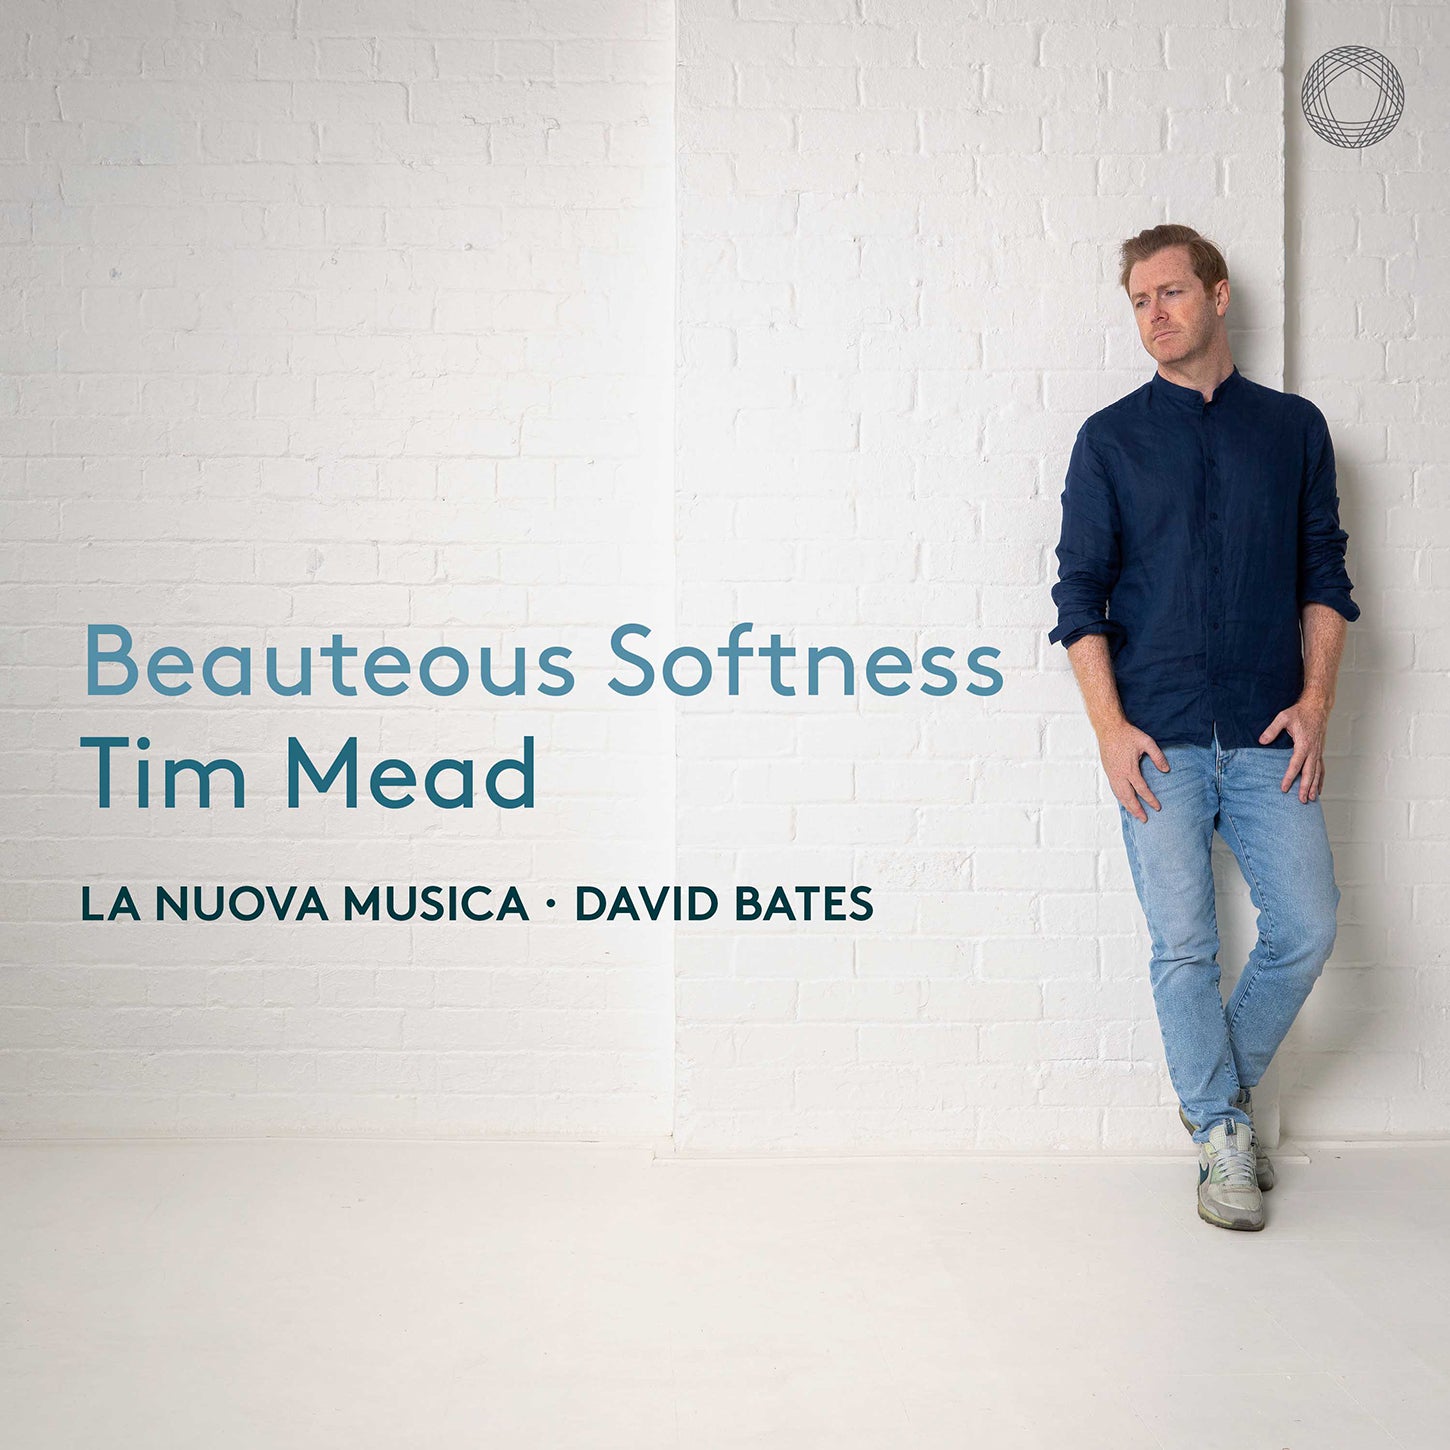 Beauteous Softness / Mead, Bates, La Nuova Musica